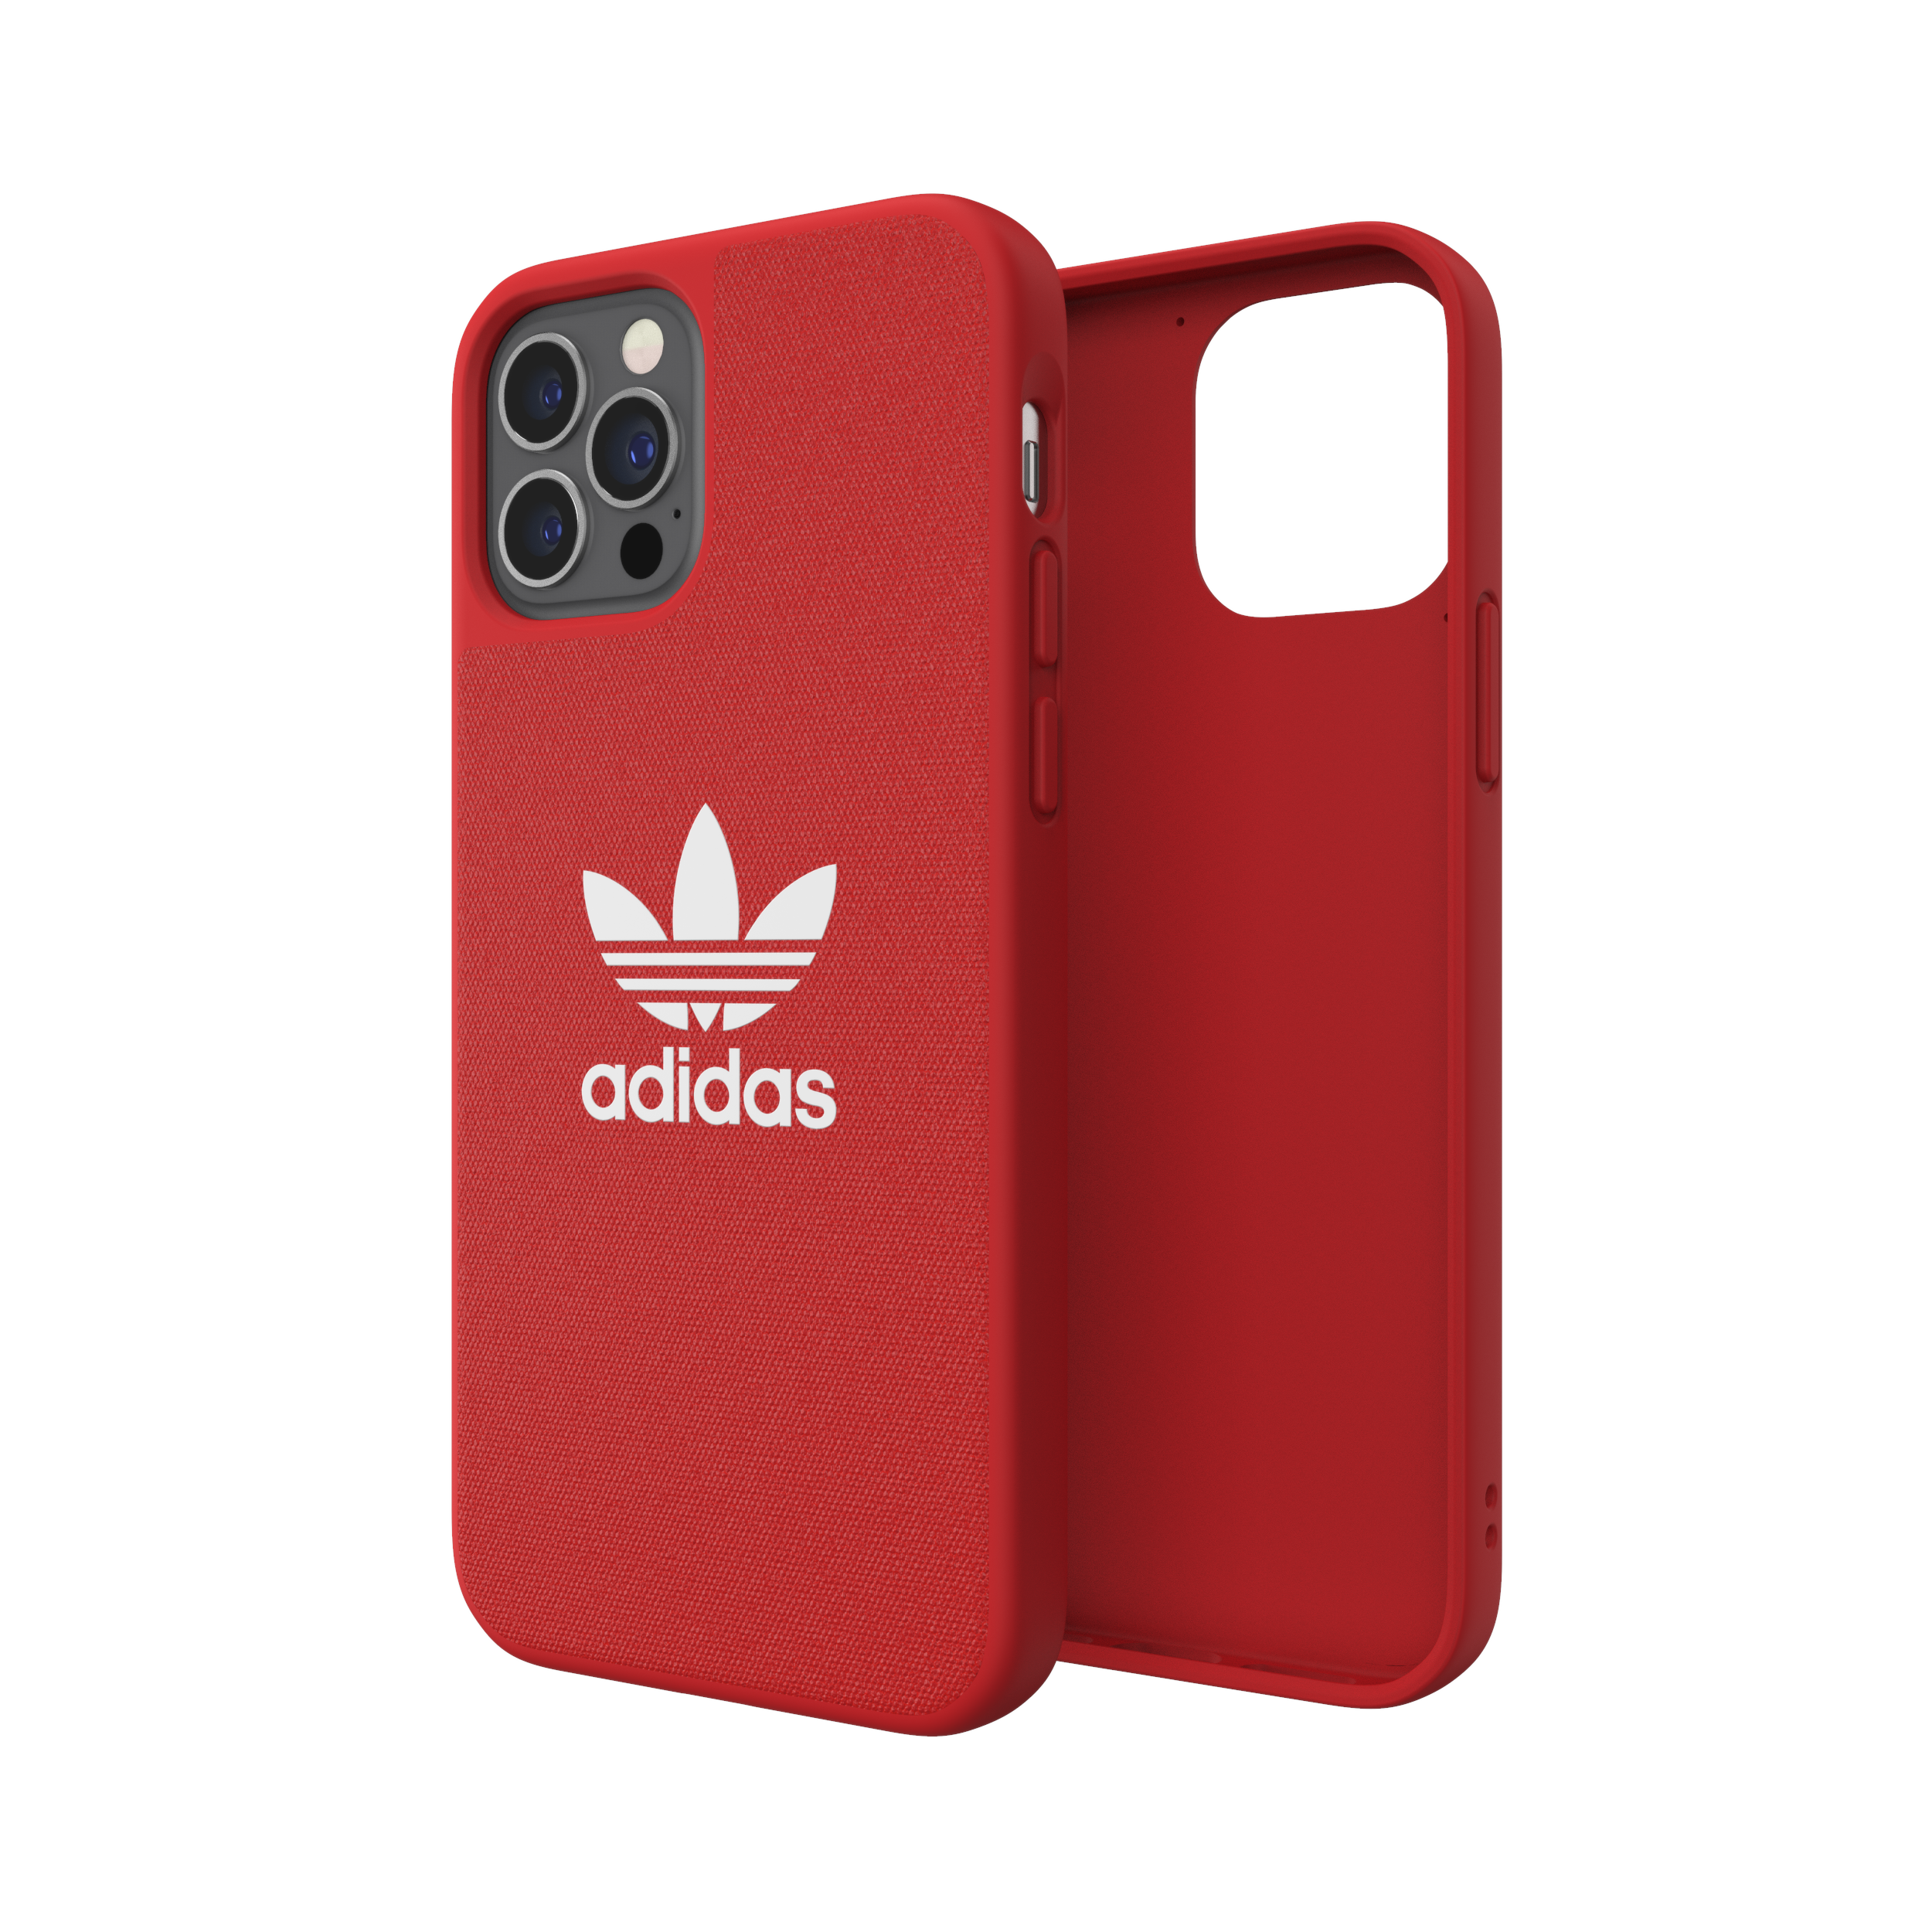 Adidas ORIGINALS Apple iPhone 12 / 12 Pro Canvas Case - Back cover w/ Trefoil Design, Scratch & Drop Protection w/ TPU Bumper, Wireless Charging Compatible - Scarlet